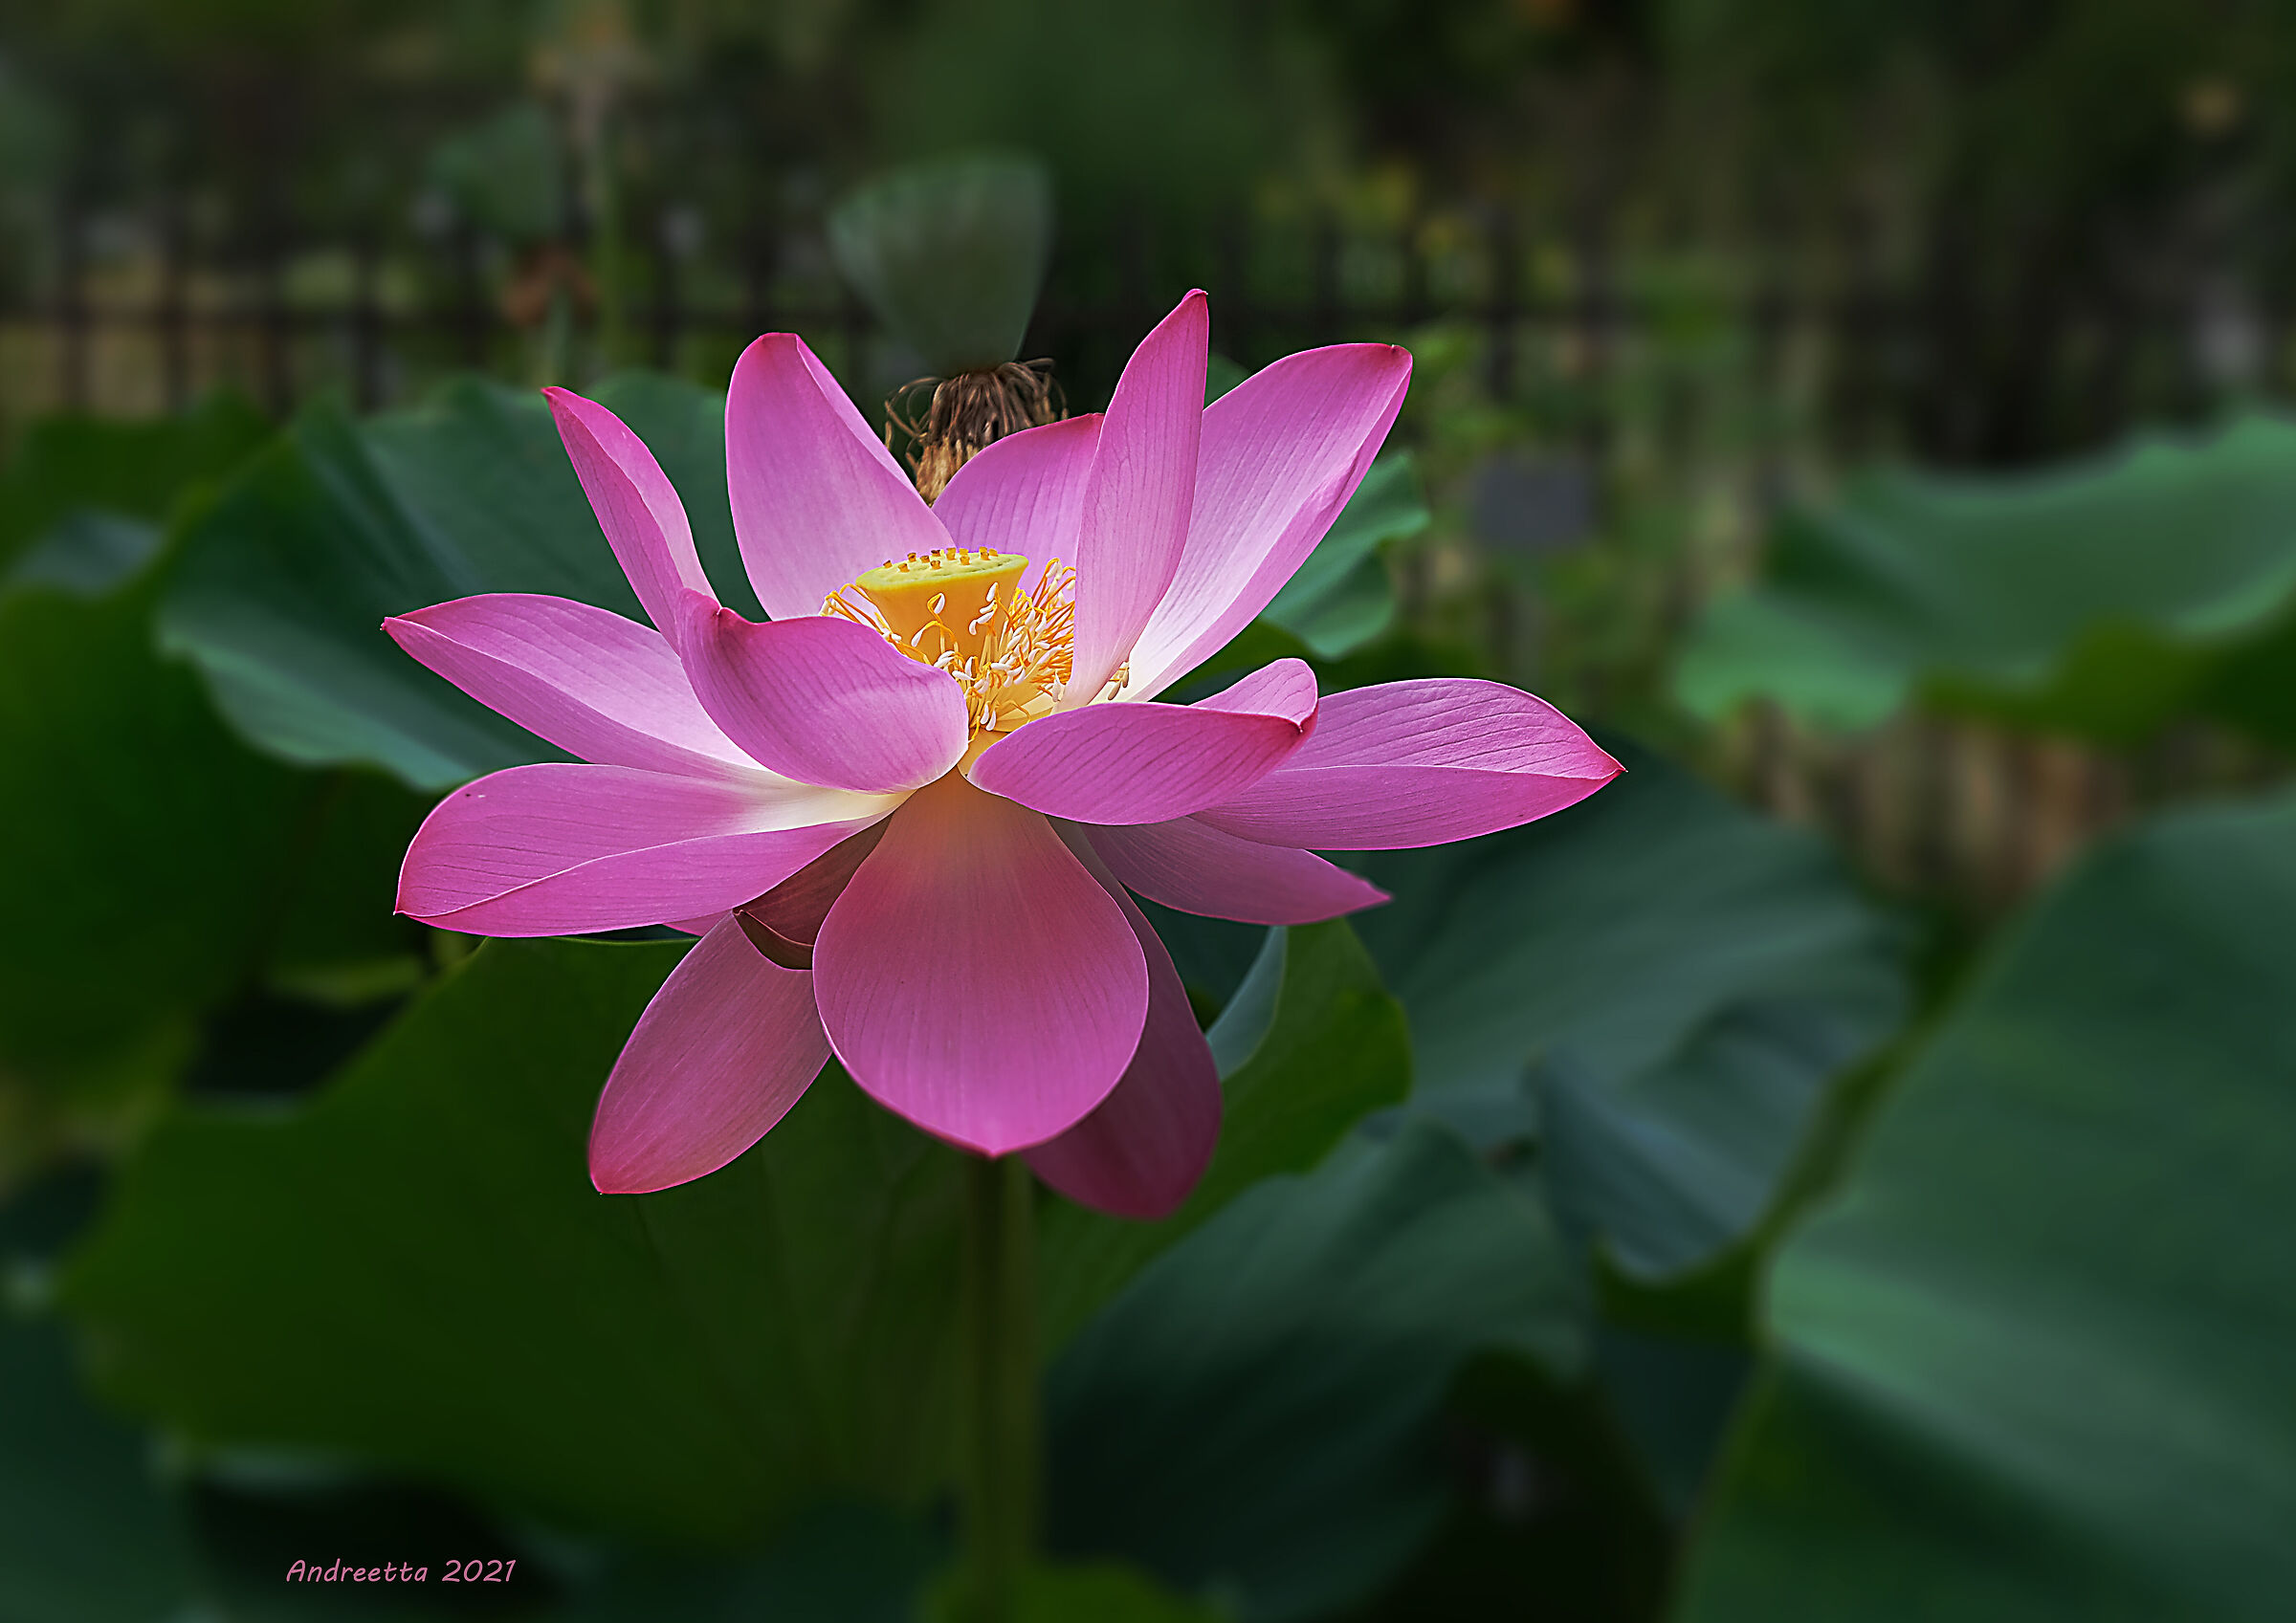 Lotus flower(Nelumbo nucifera)...